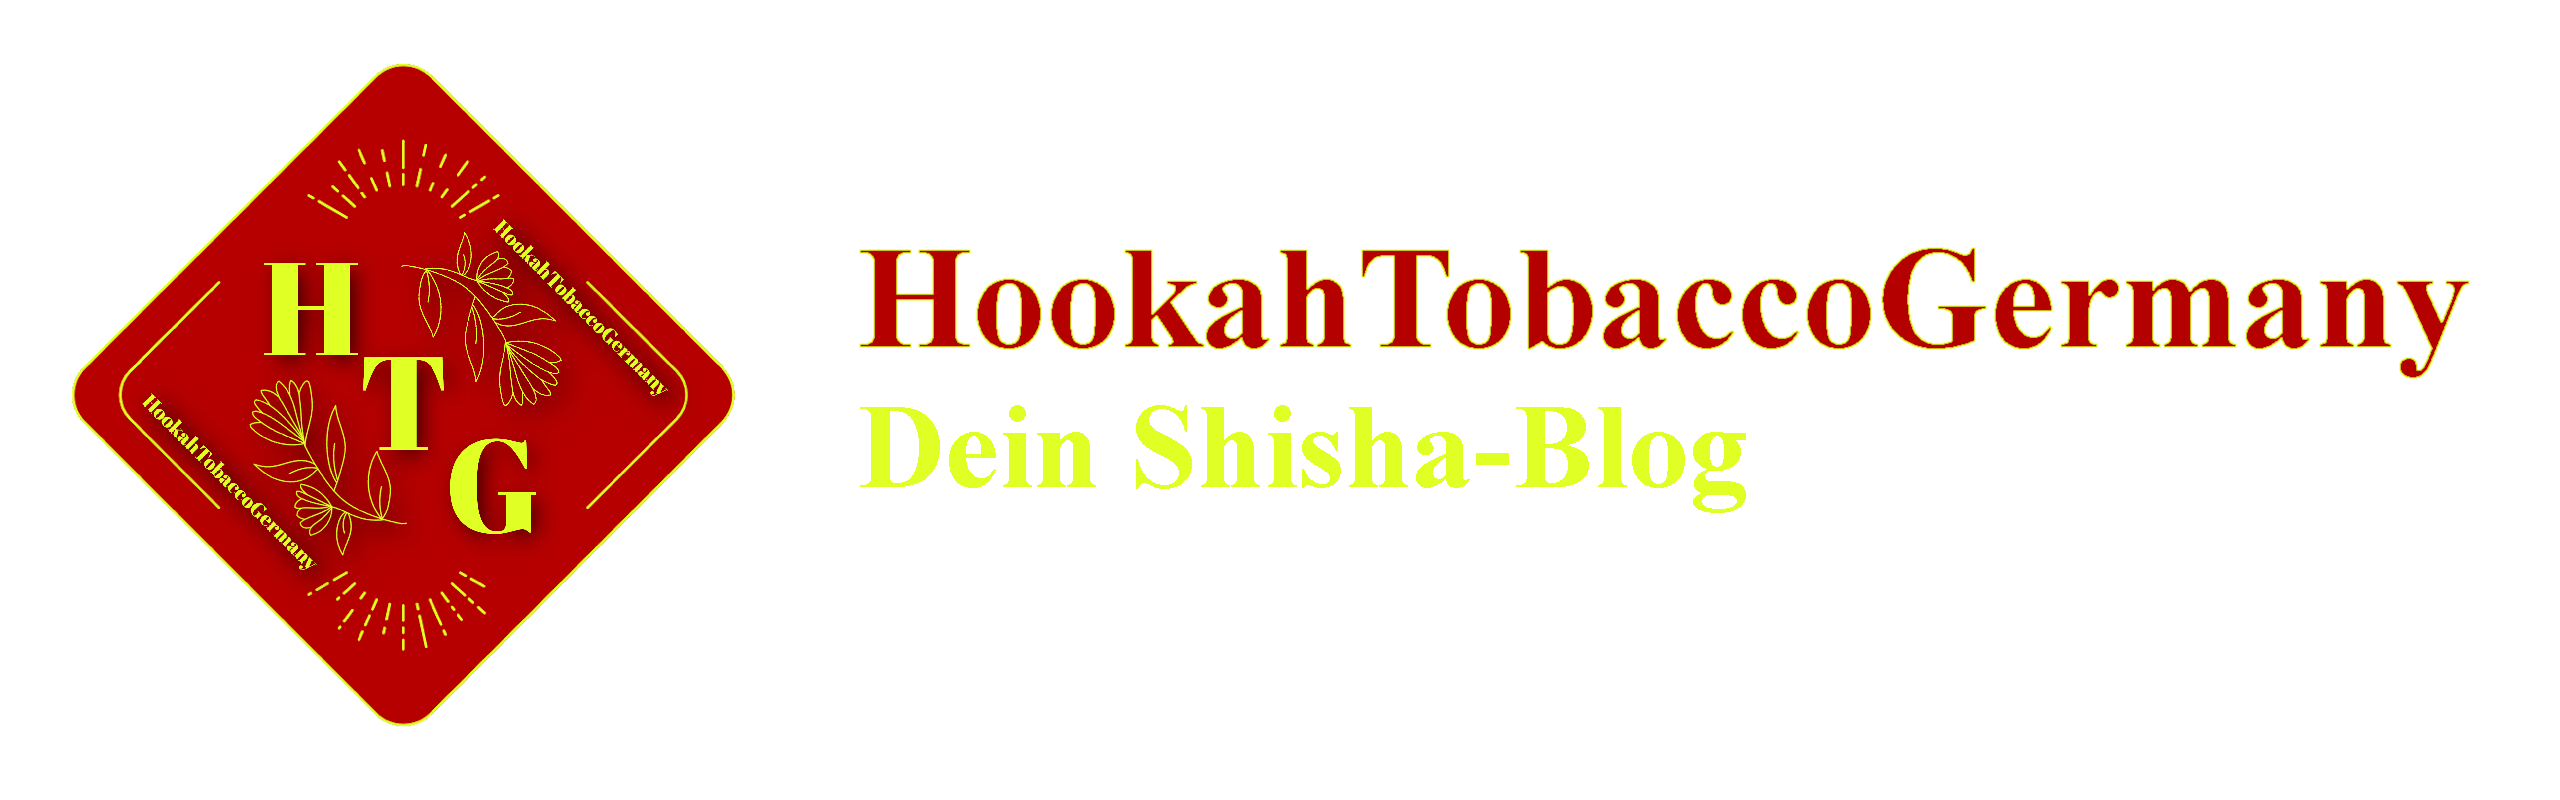 HTG - Hookah Tobacco Germany Logo